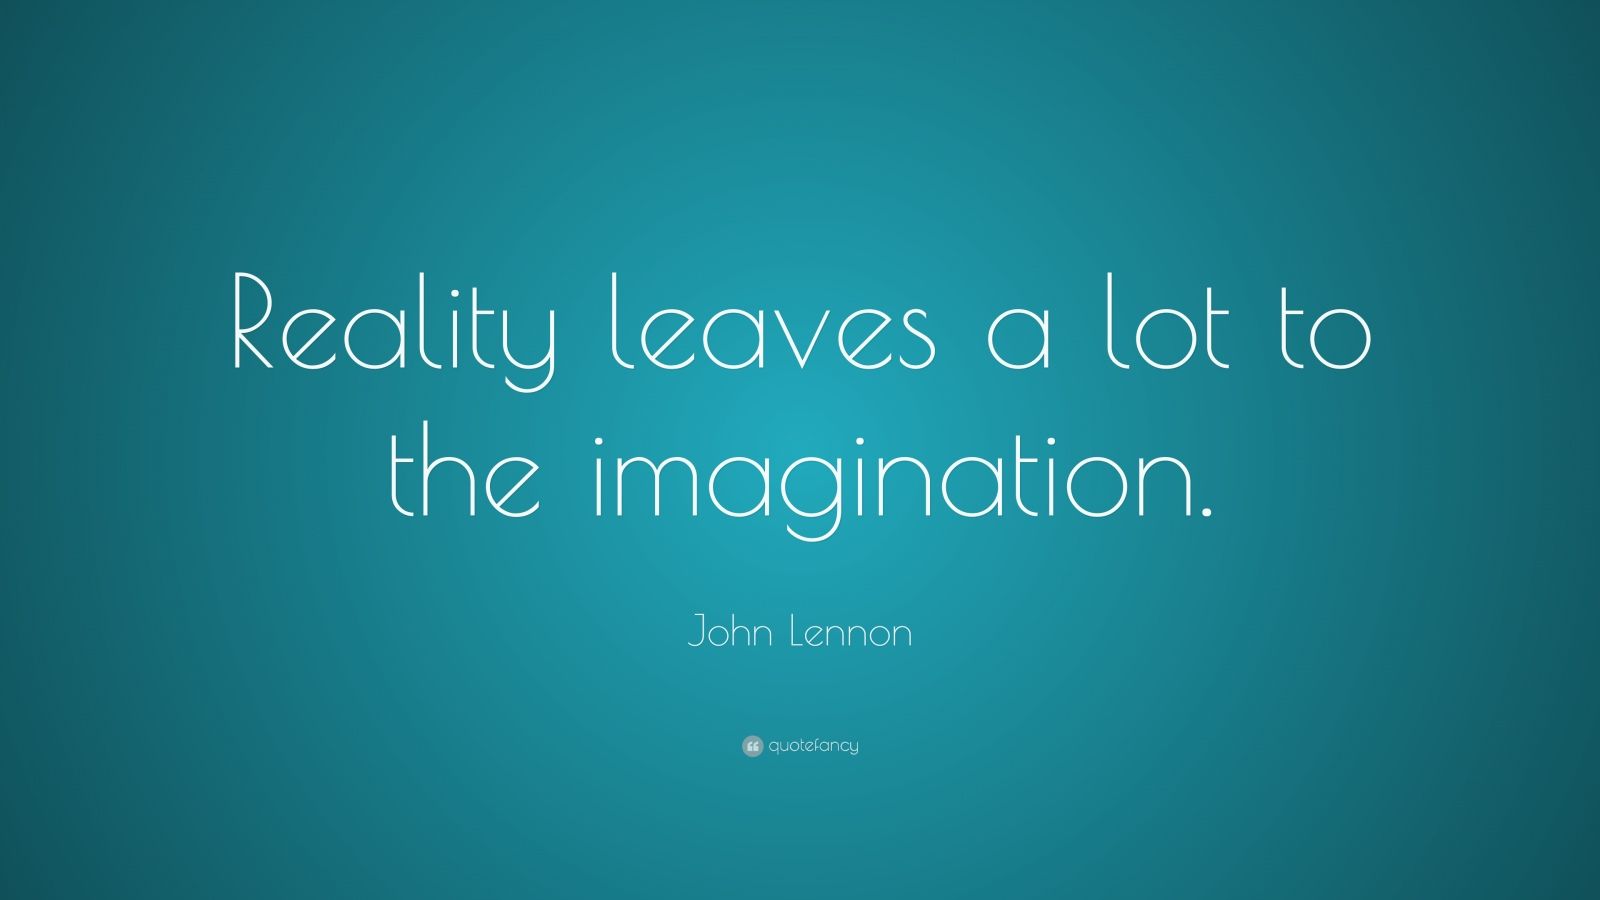 John Lennon Quote: 